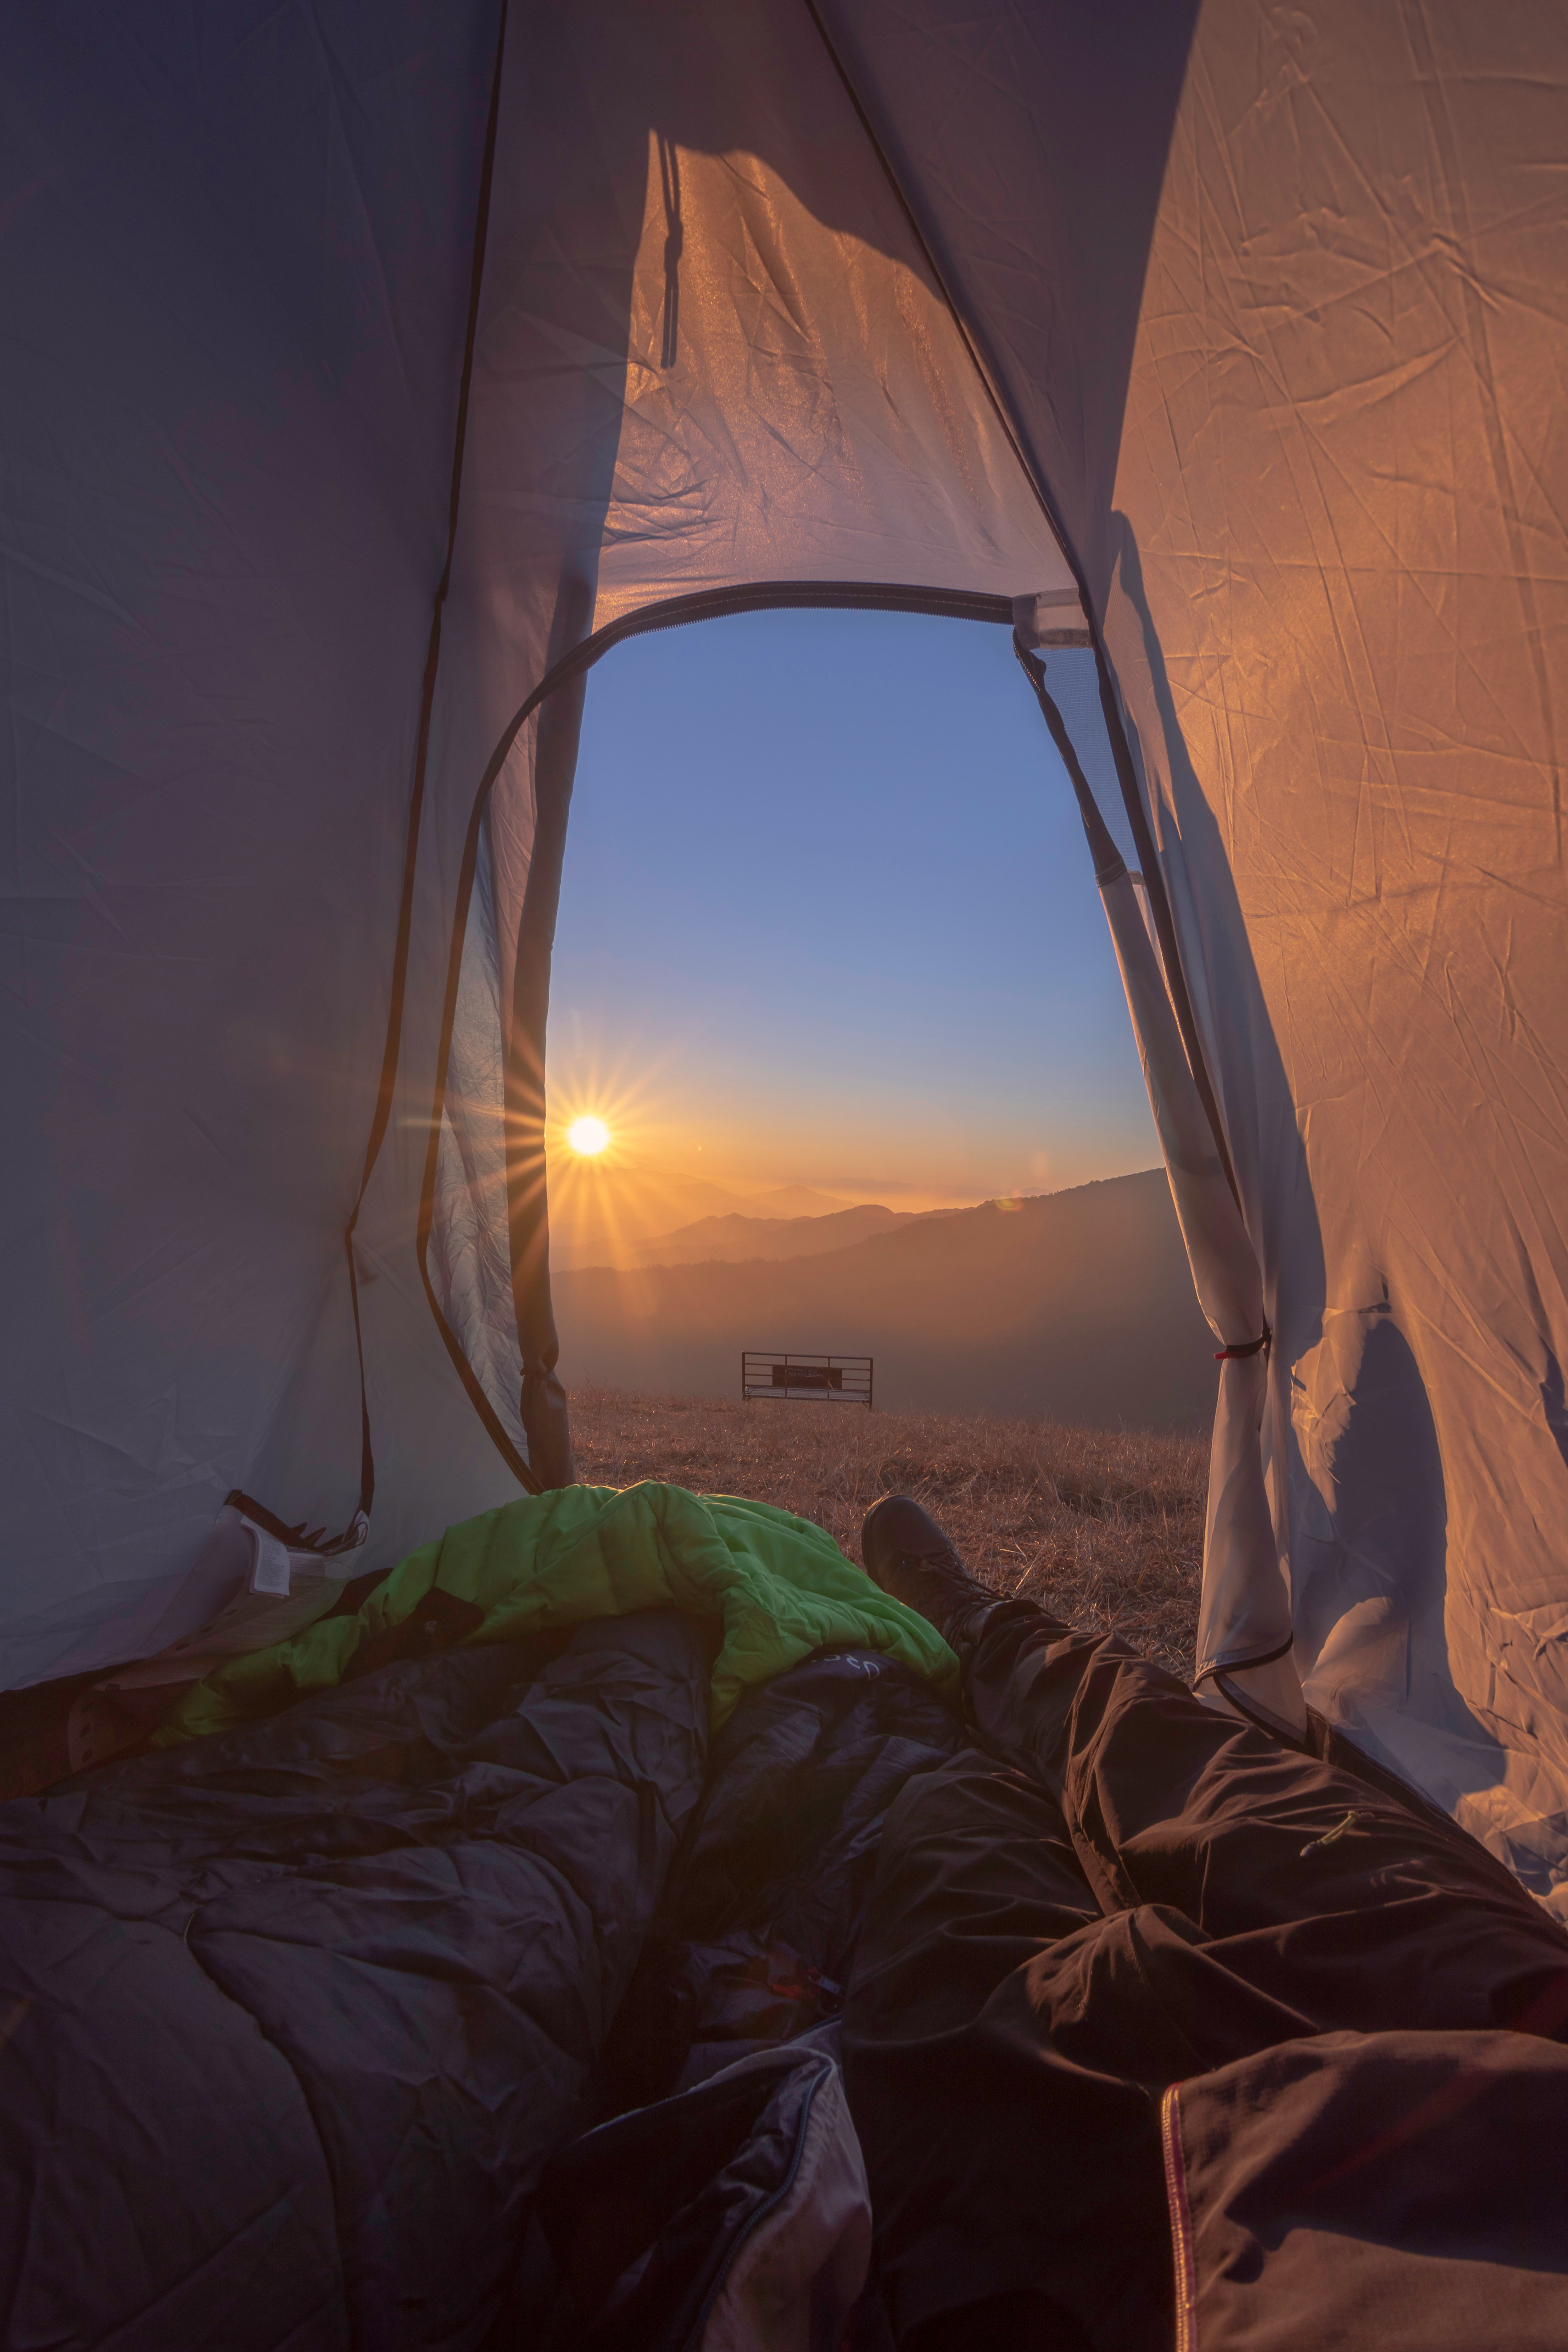 campsite, journey, camping, nature, tent, legs, sunlight, tourism